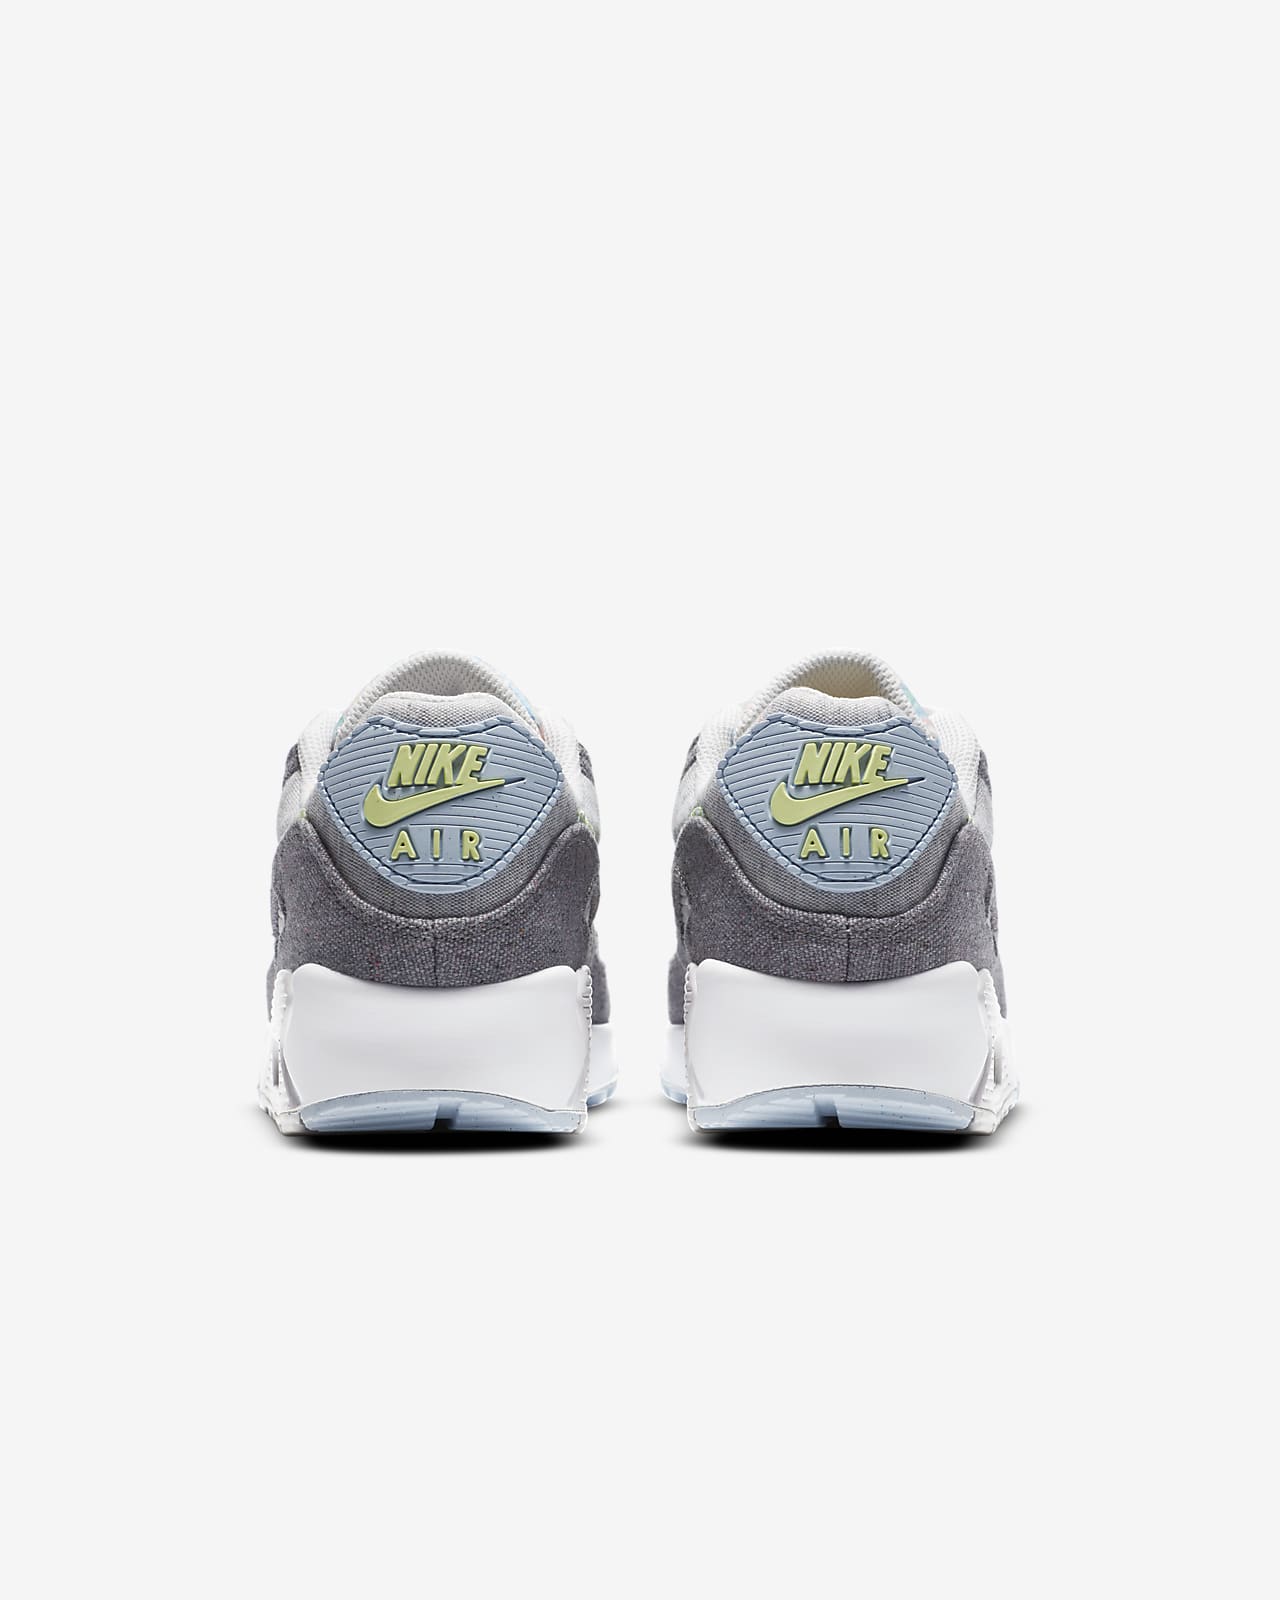 Nike Air Max 90 NRG Men's Shoe